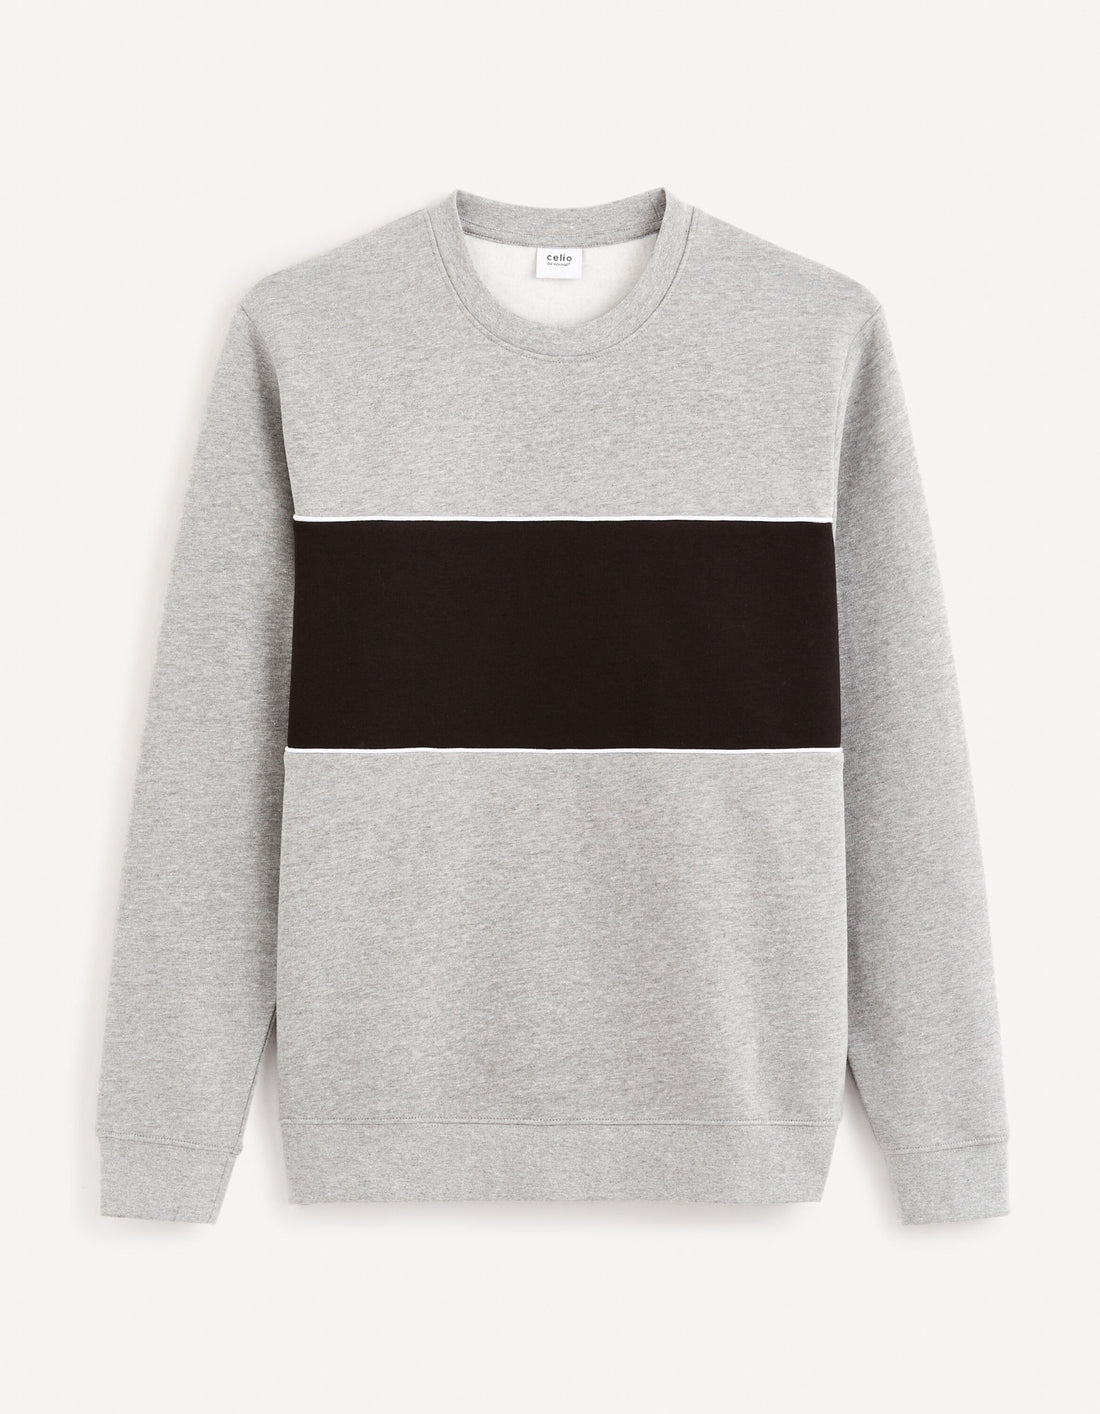 Cotton Blend Crew Neck Sweatshirt - Heater Grey_FEHOPE_GREY MEL_01